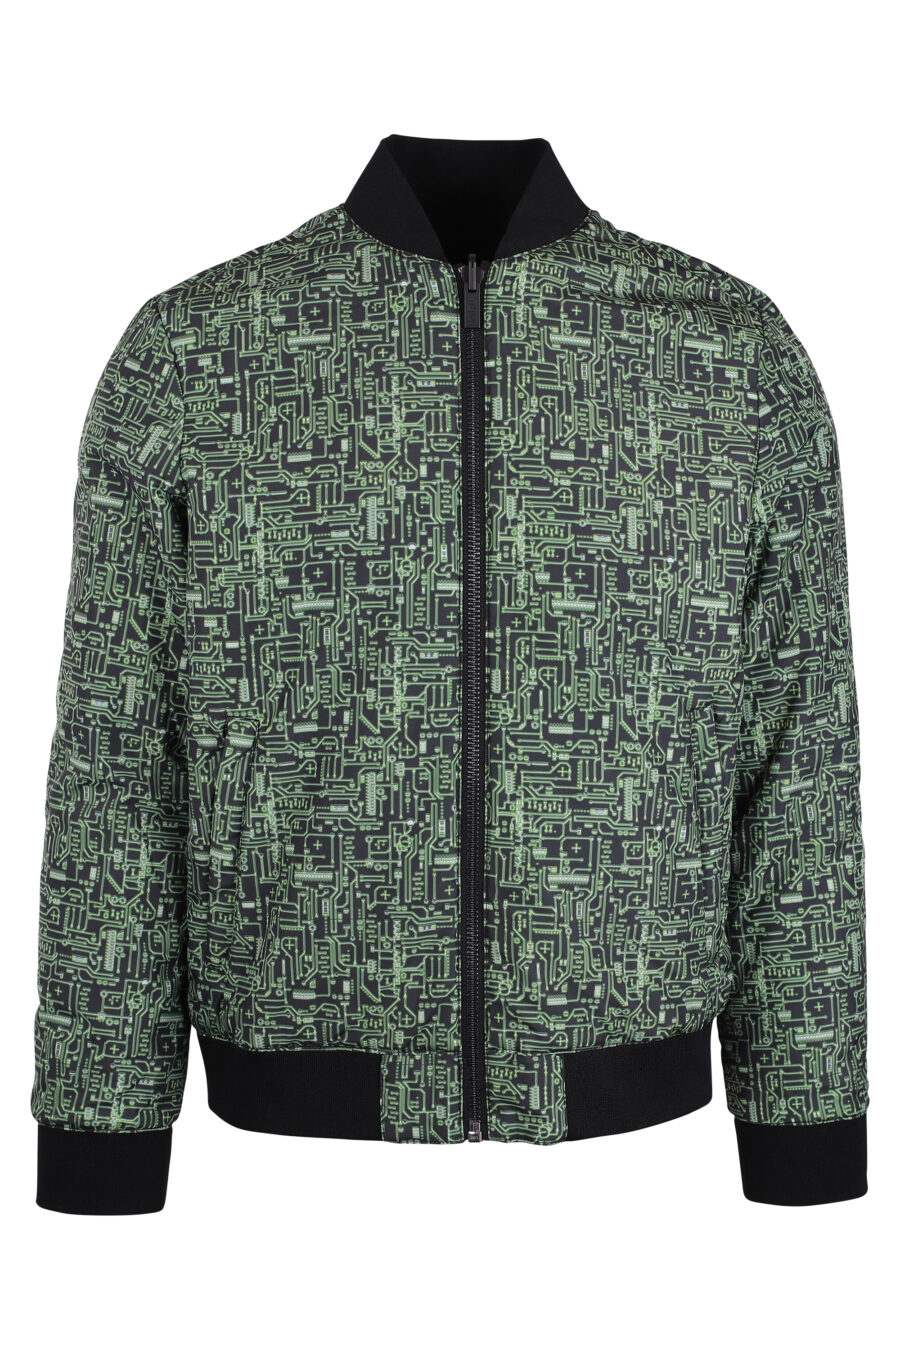 Reversible green and black printed bomber jacket - IMG 4295